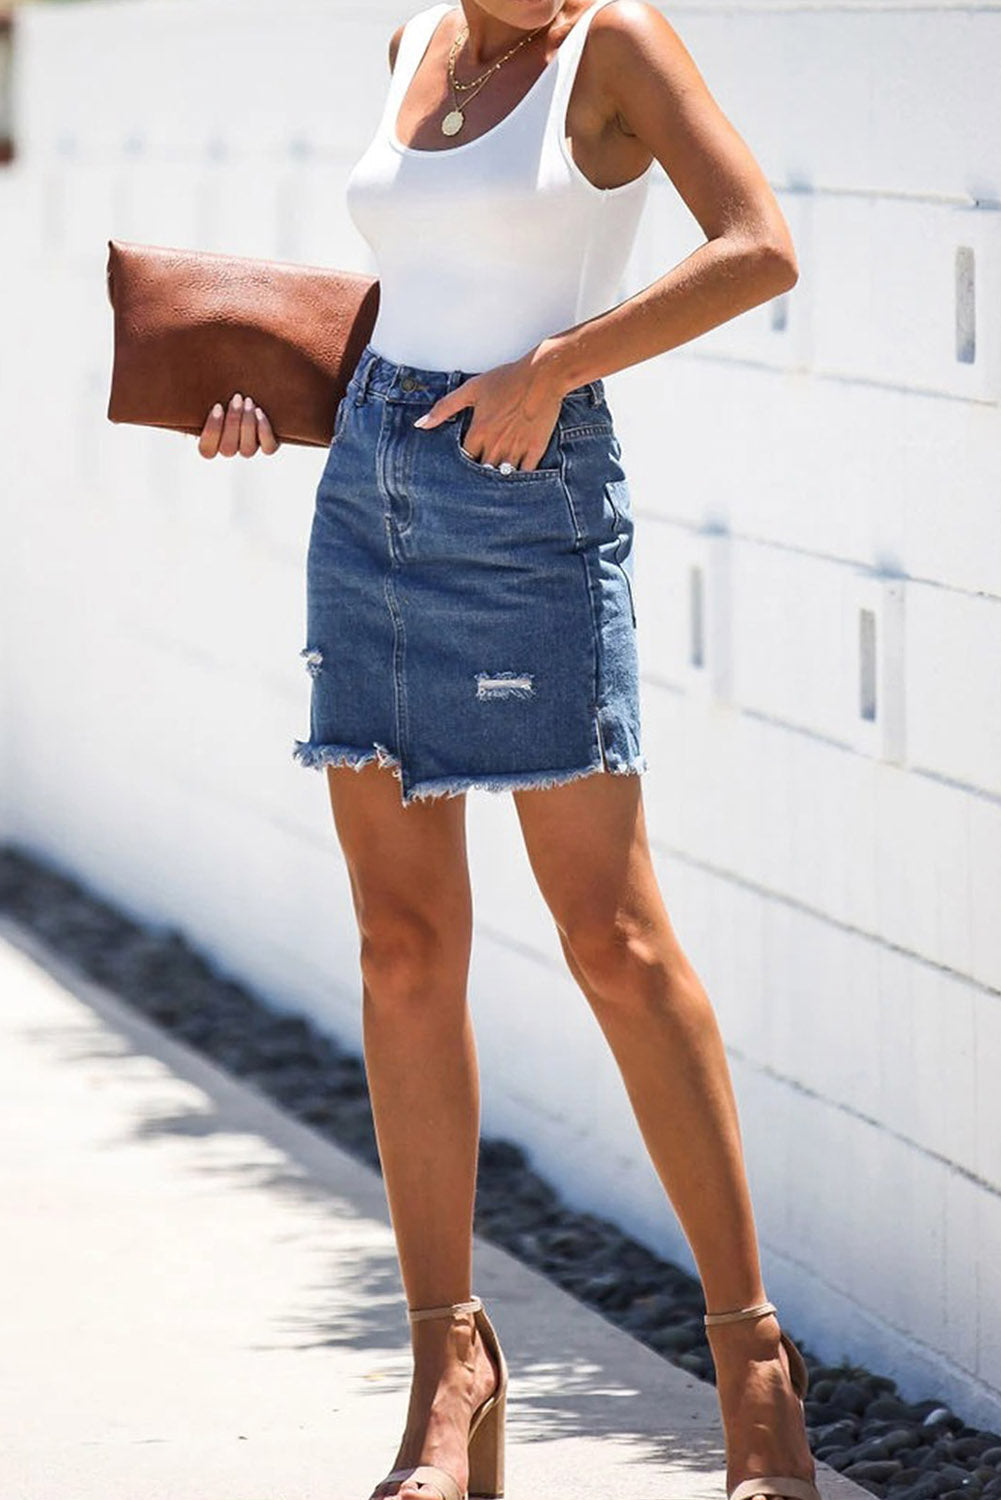 Denim Skirt : Great way to add excitement and adventure – HoneymoonGini